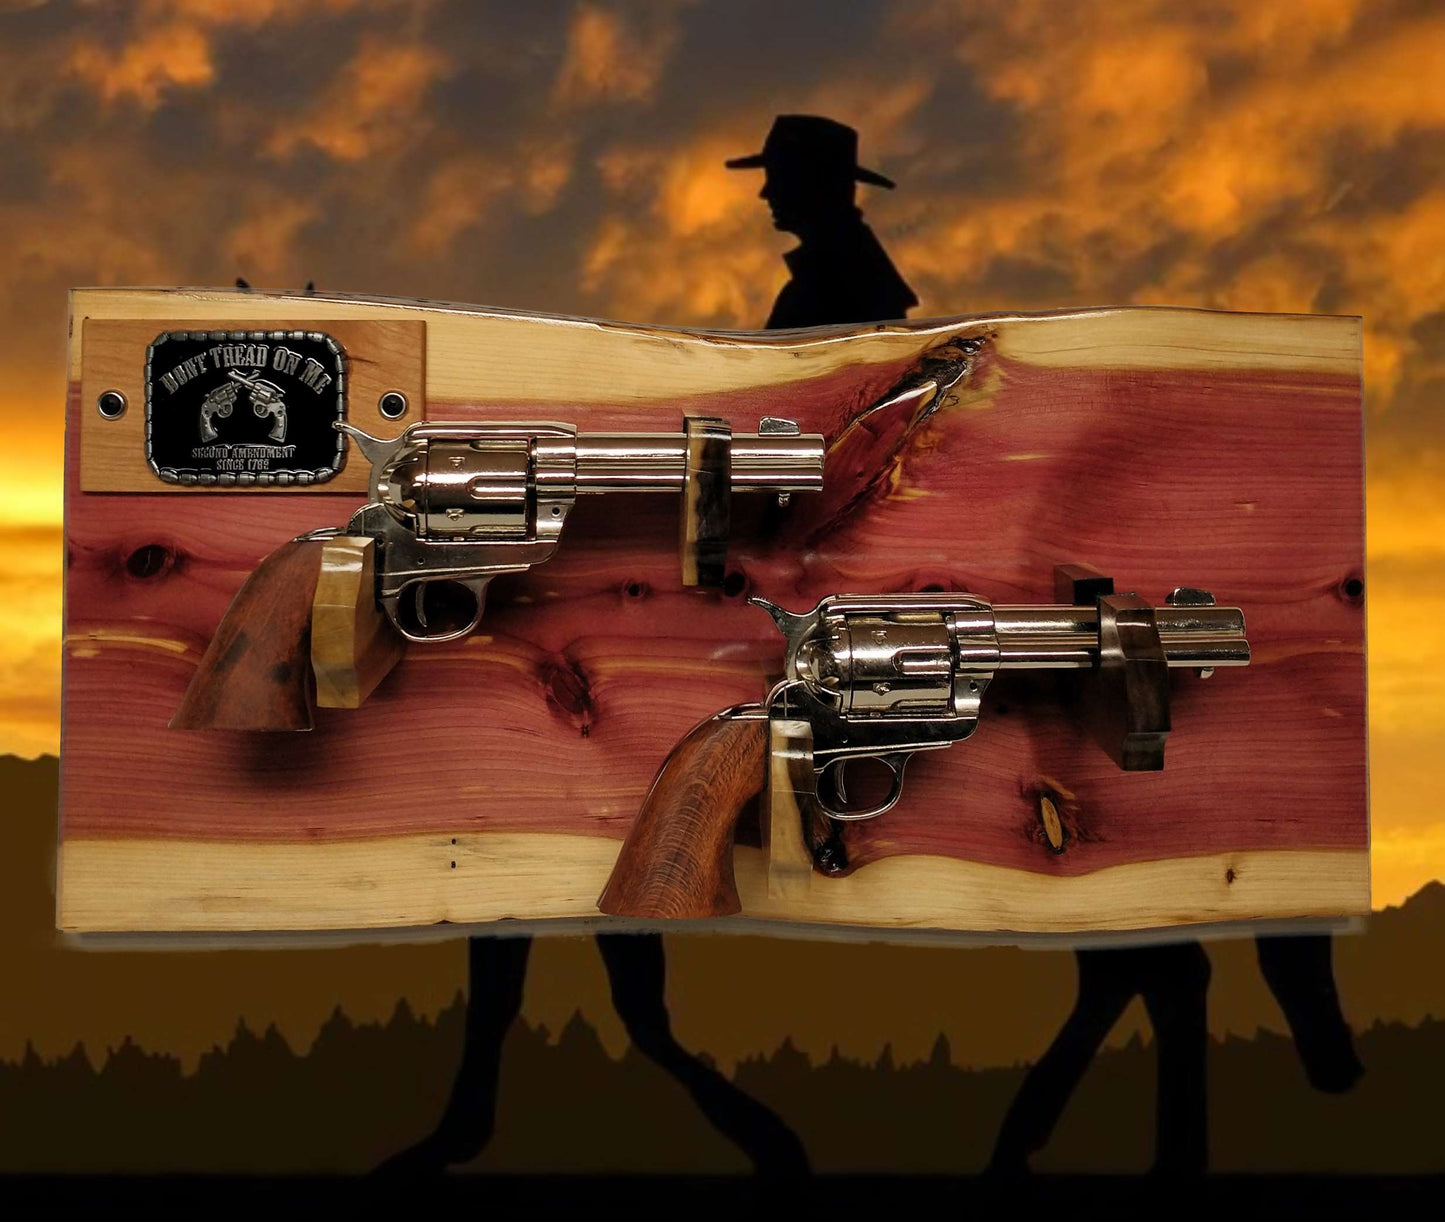 walkerwoodgifts gun rack Rustic Live Edge Red Cedar Dual Colt Pistol Display Wonderful Gift Cabin Western Décor Collectors Gift